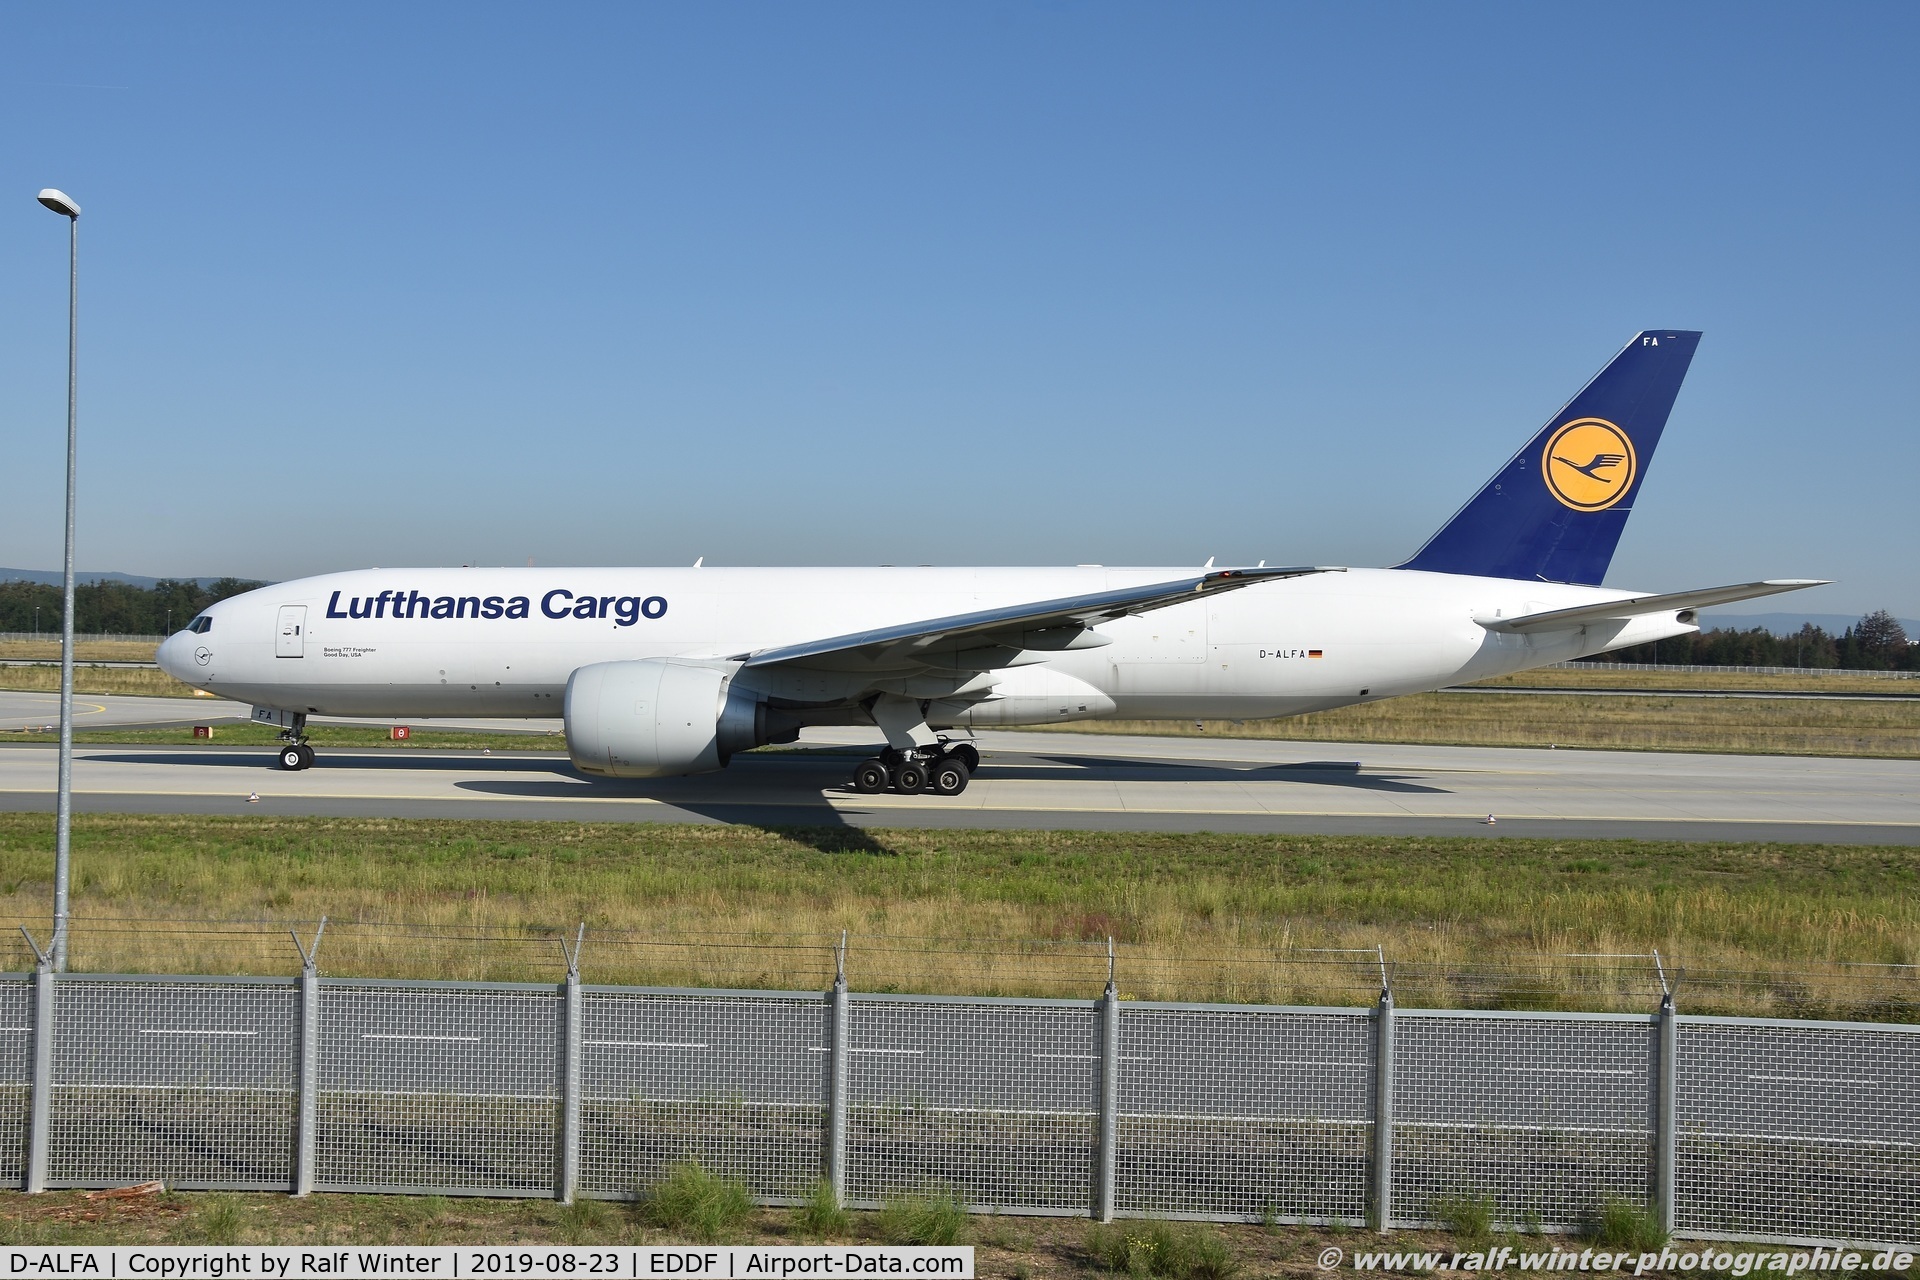 D-ALFA, 2013 Boeing 777-FBT C/N 41674, Boeing 777-FBT - LH GEC Lufthansa Cargo 'Good Day, USA' - 41674 - D-ALFA - 23.08.2019 - FRA